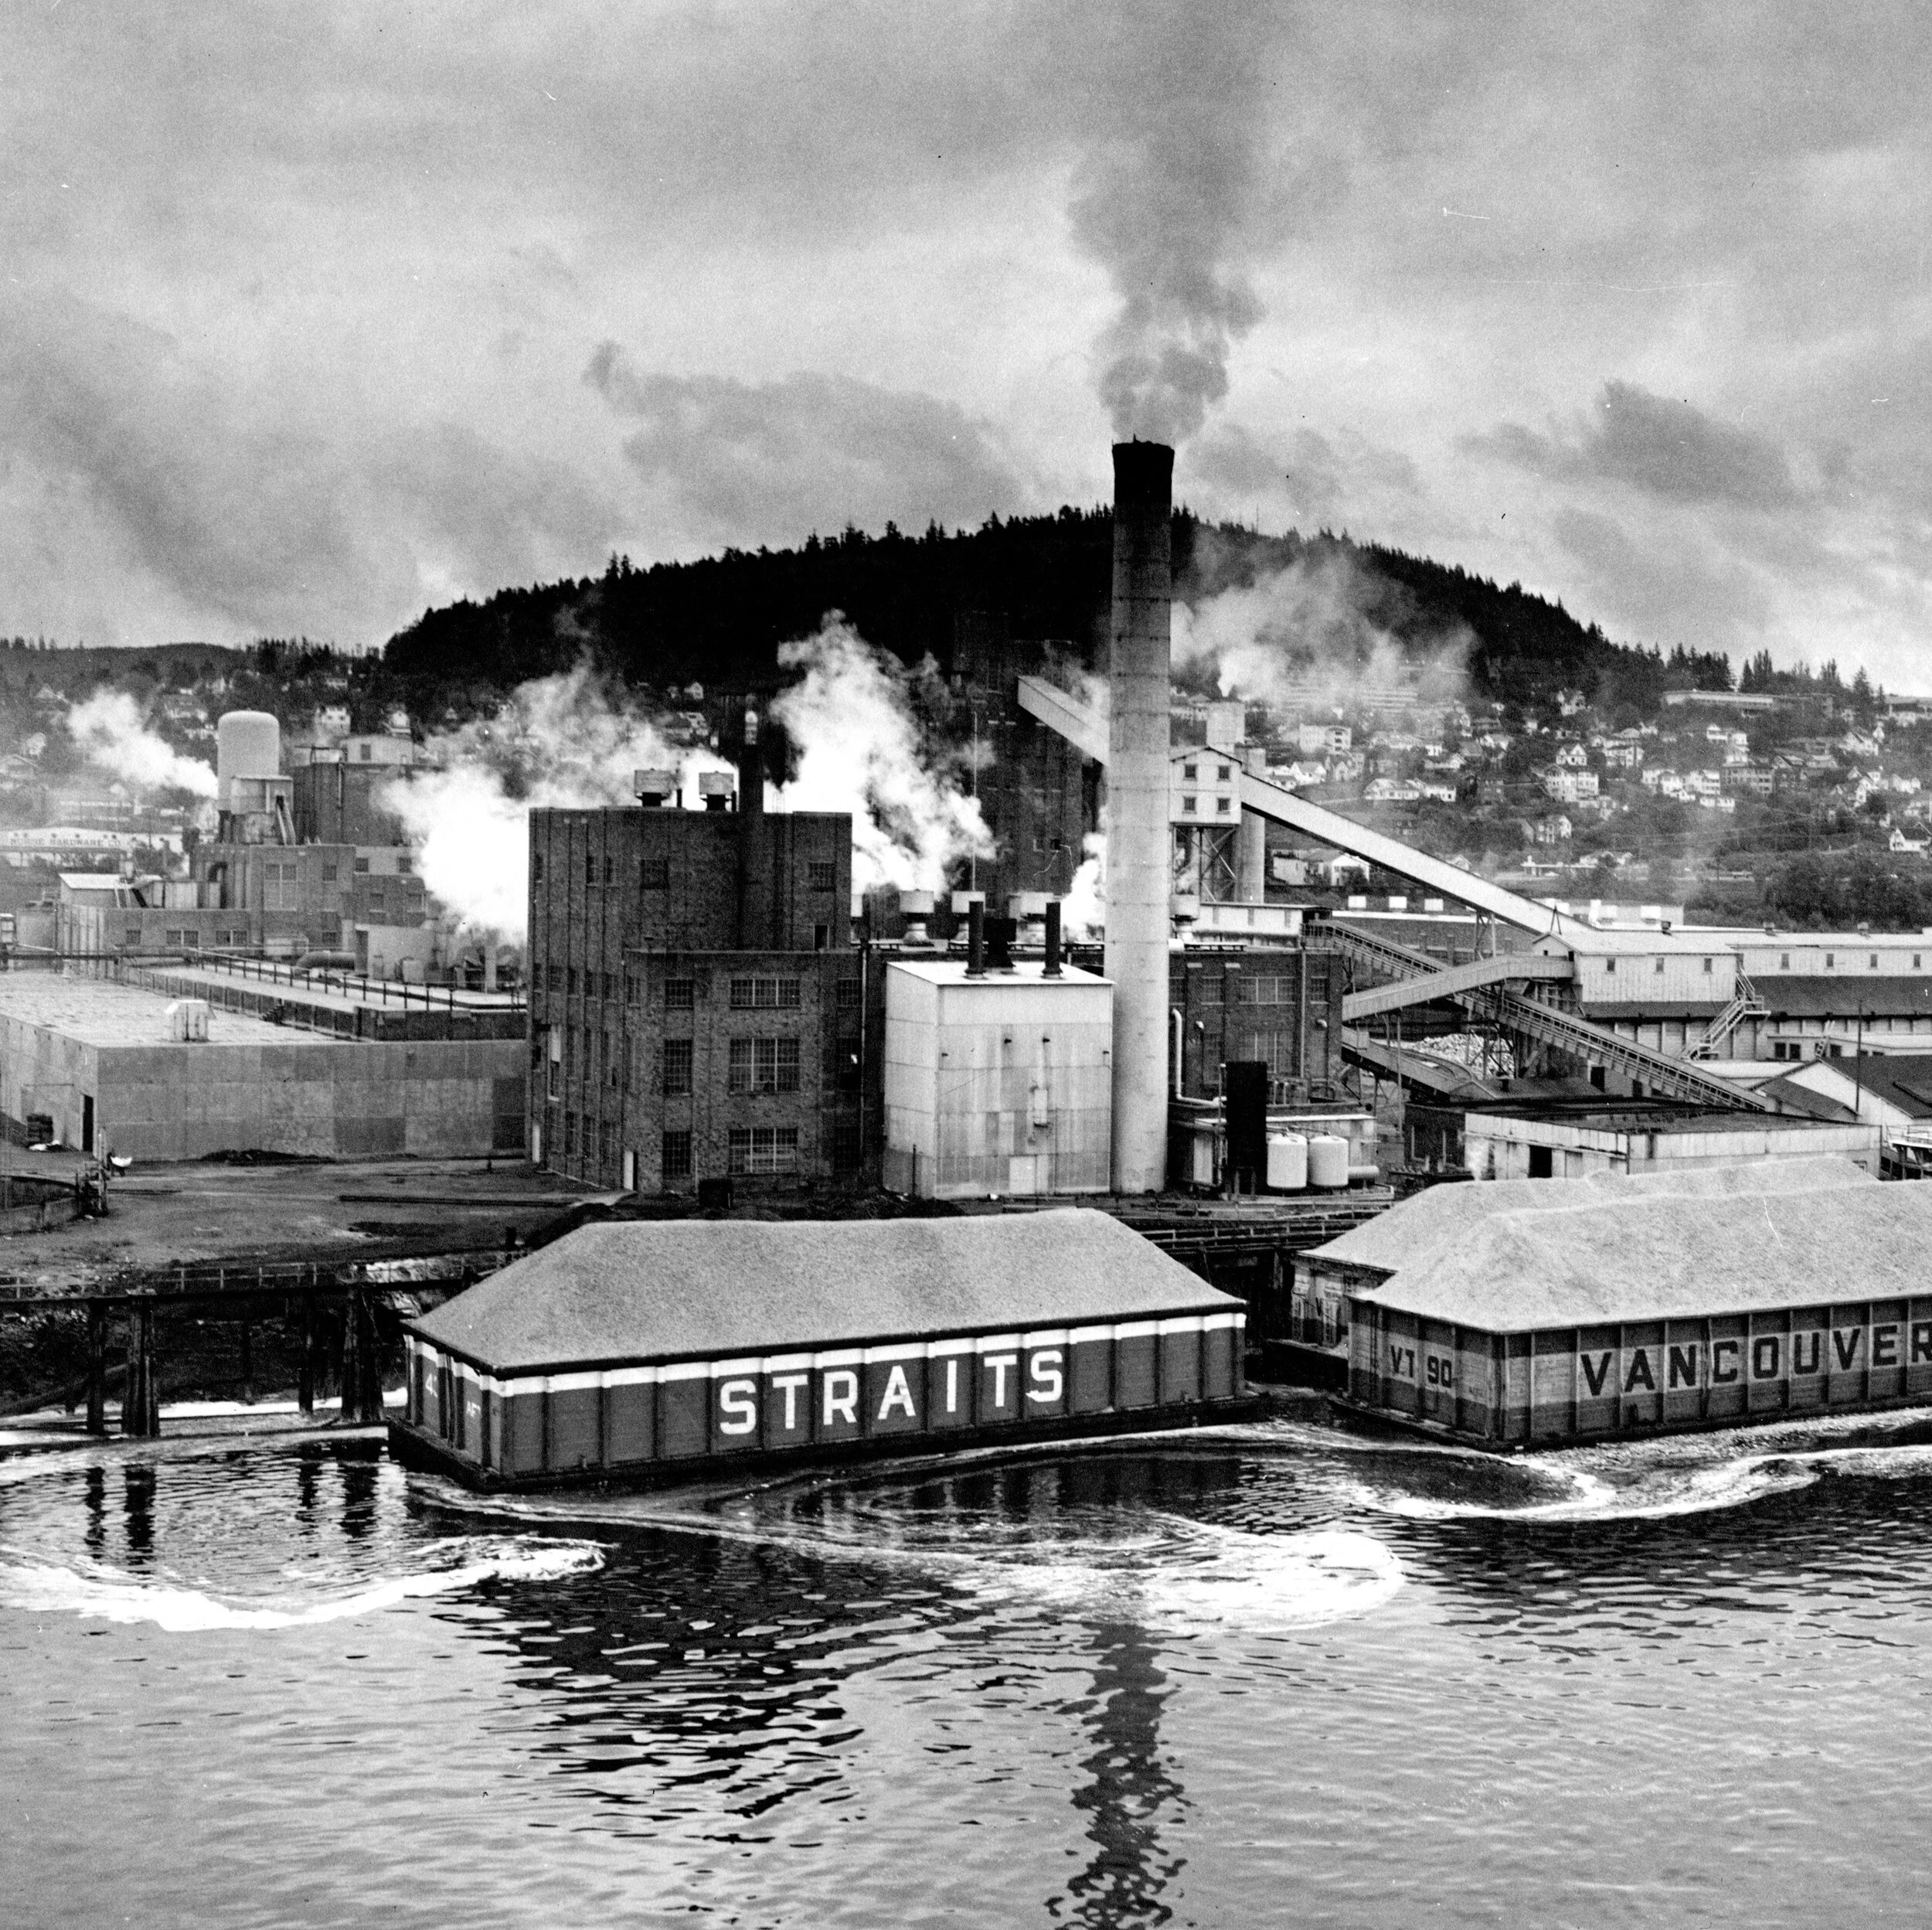 Vintage image of Georgia Pacific factory in Bellingham, WA